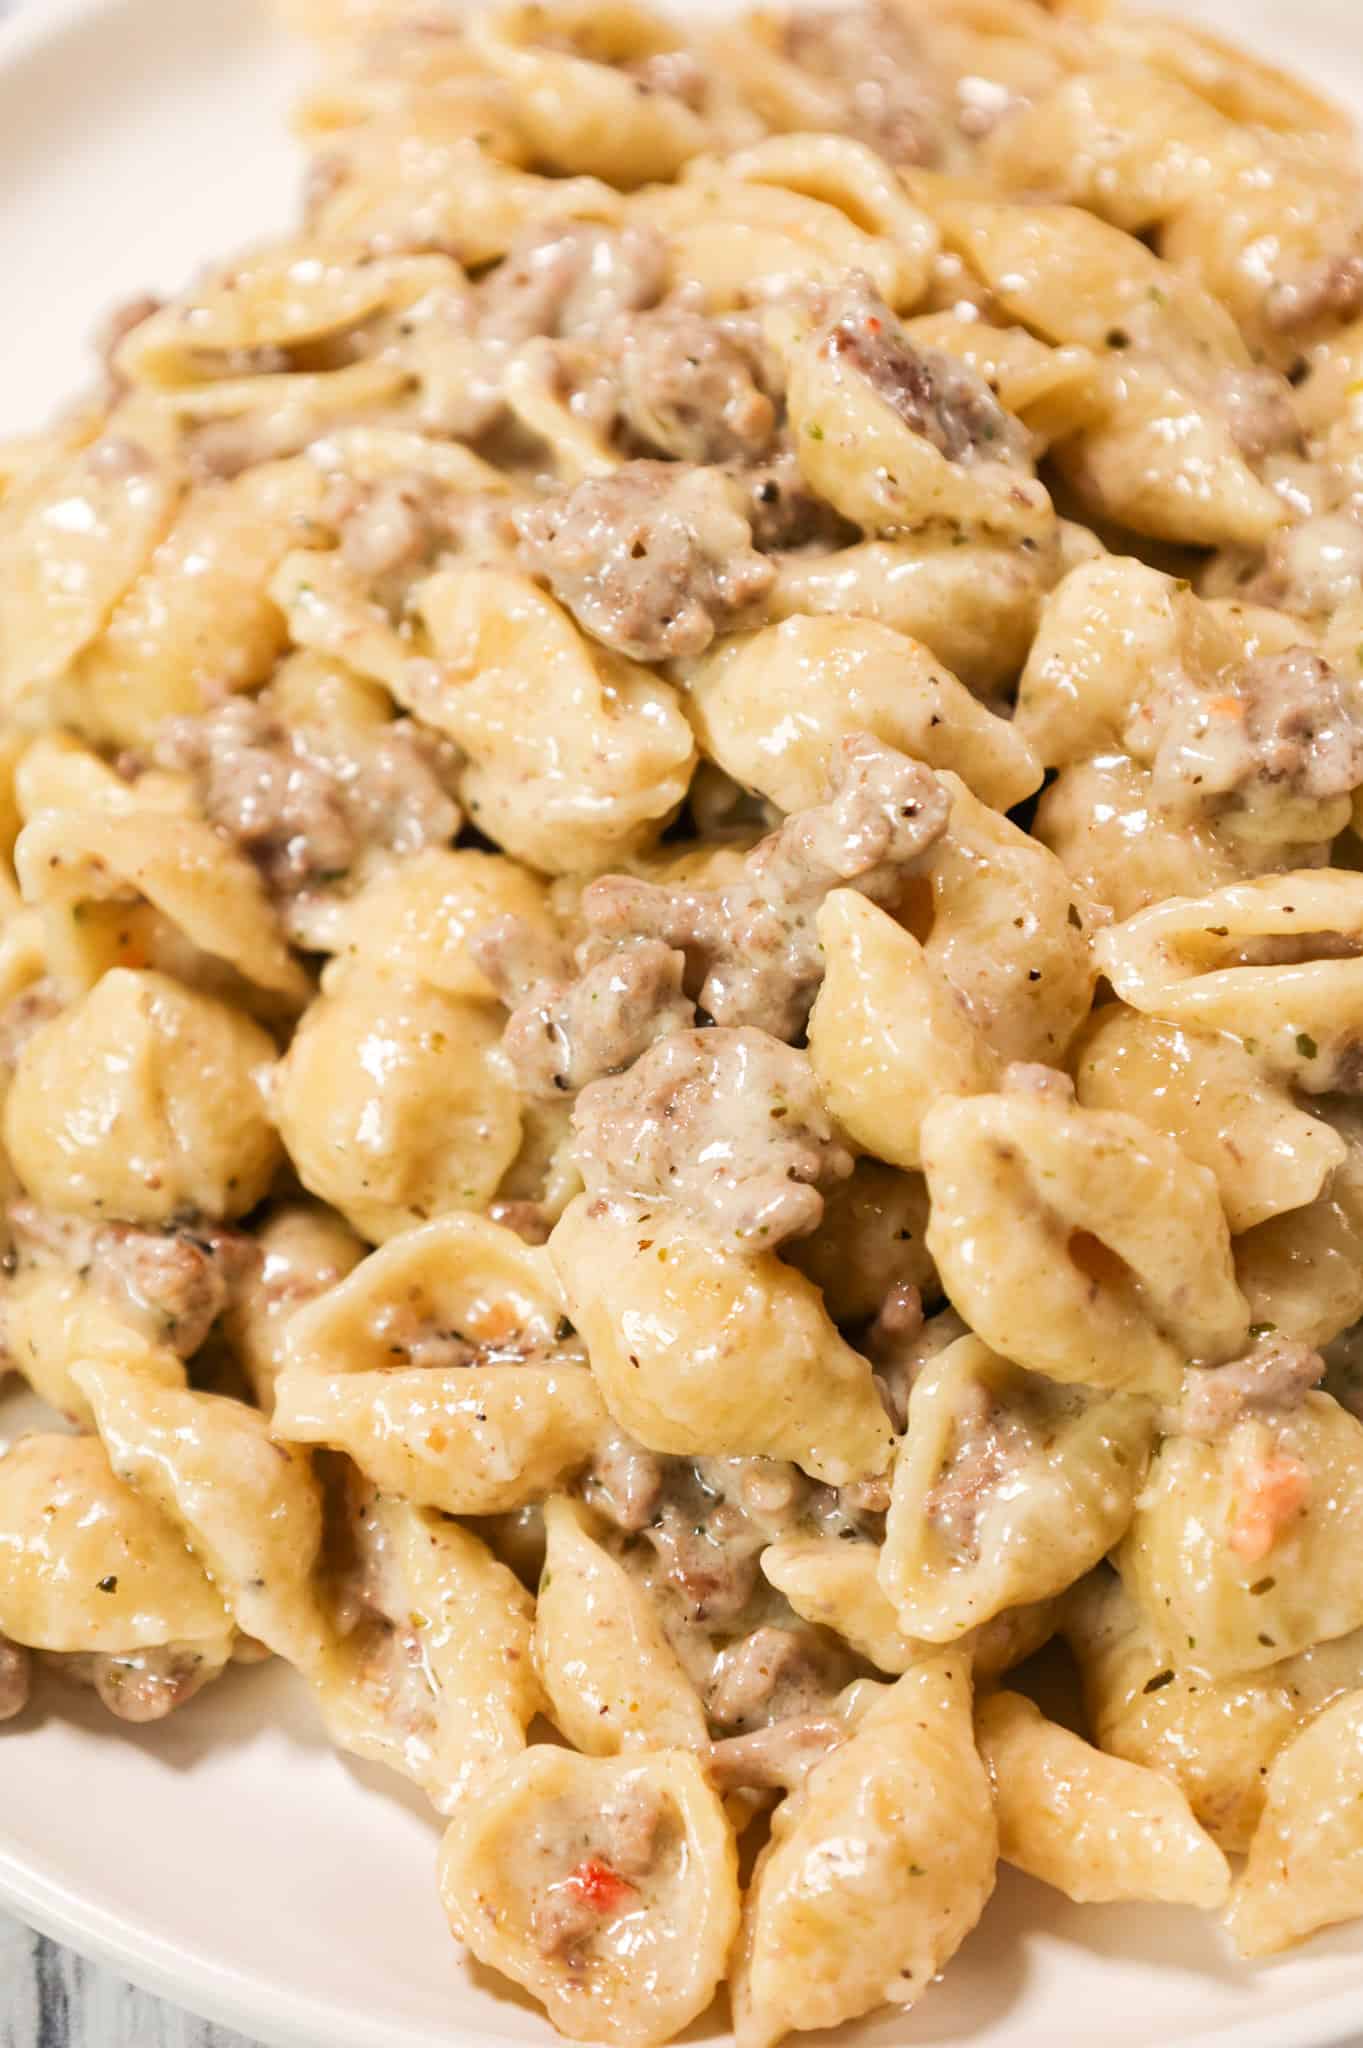 Ground Beef Alfredo is a creamy pasta recipe loaded with hamburger meat, garlic puree, Italian seasoning and parmesan cheese.